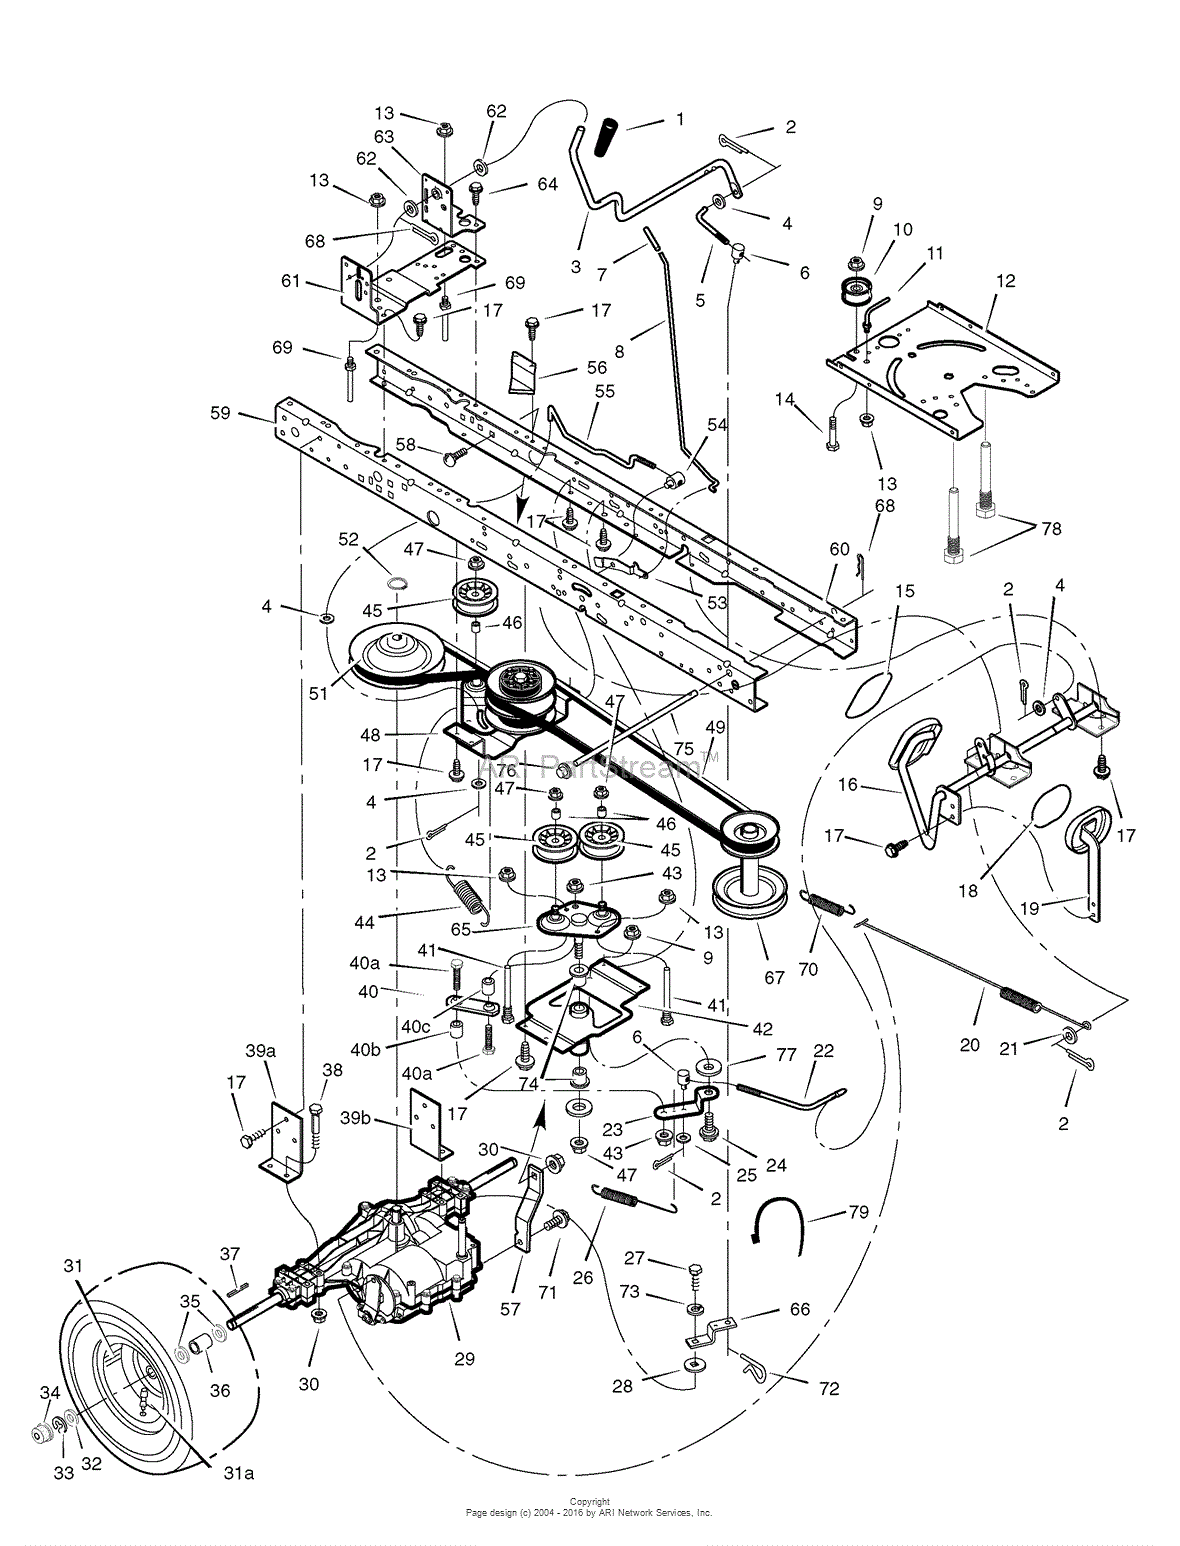 Wiring Diagram For Scott Lawn Mower